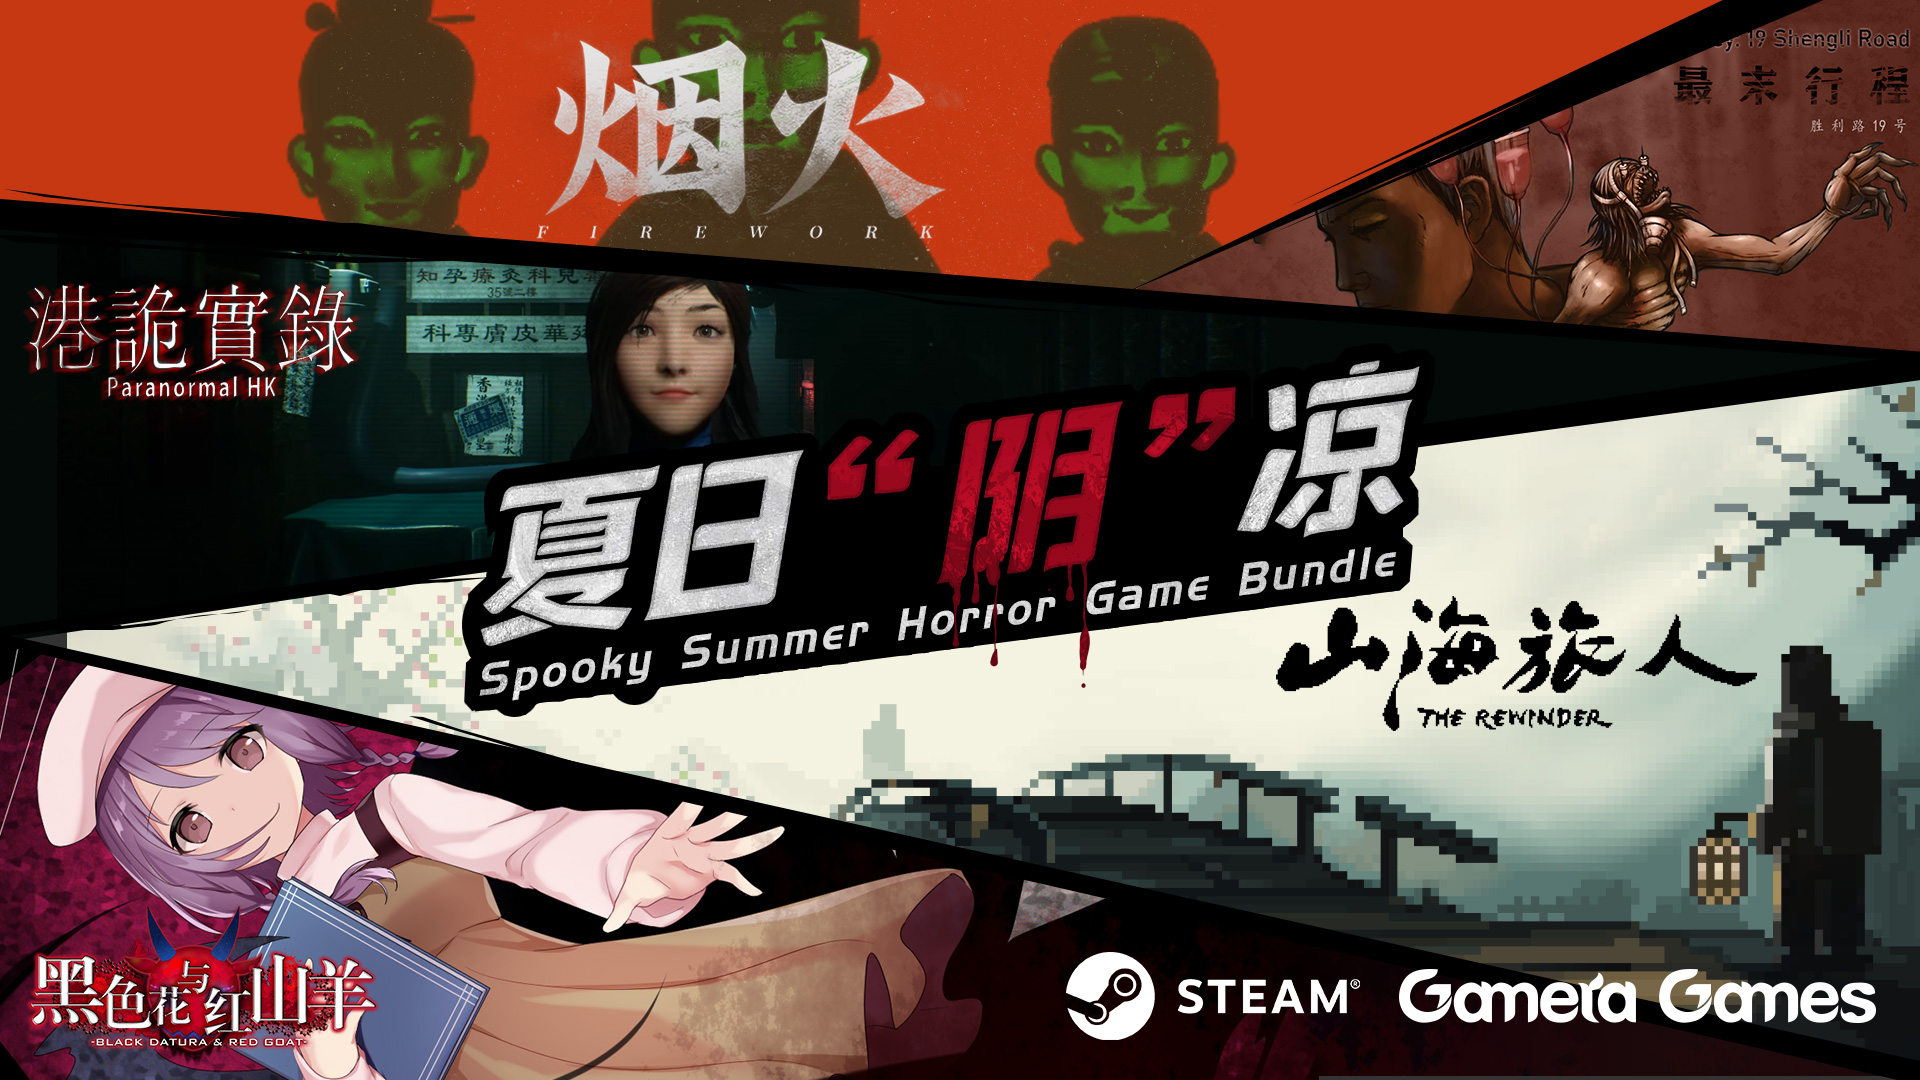 Steam夏促開啟 Gamera Games推出「陰間遊戲」同捆包